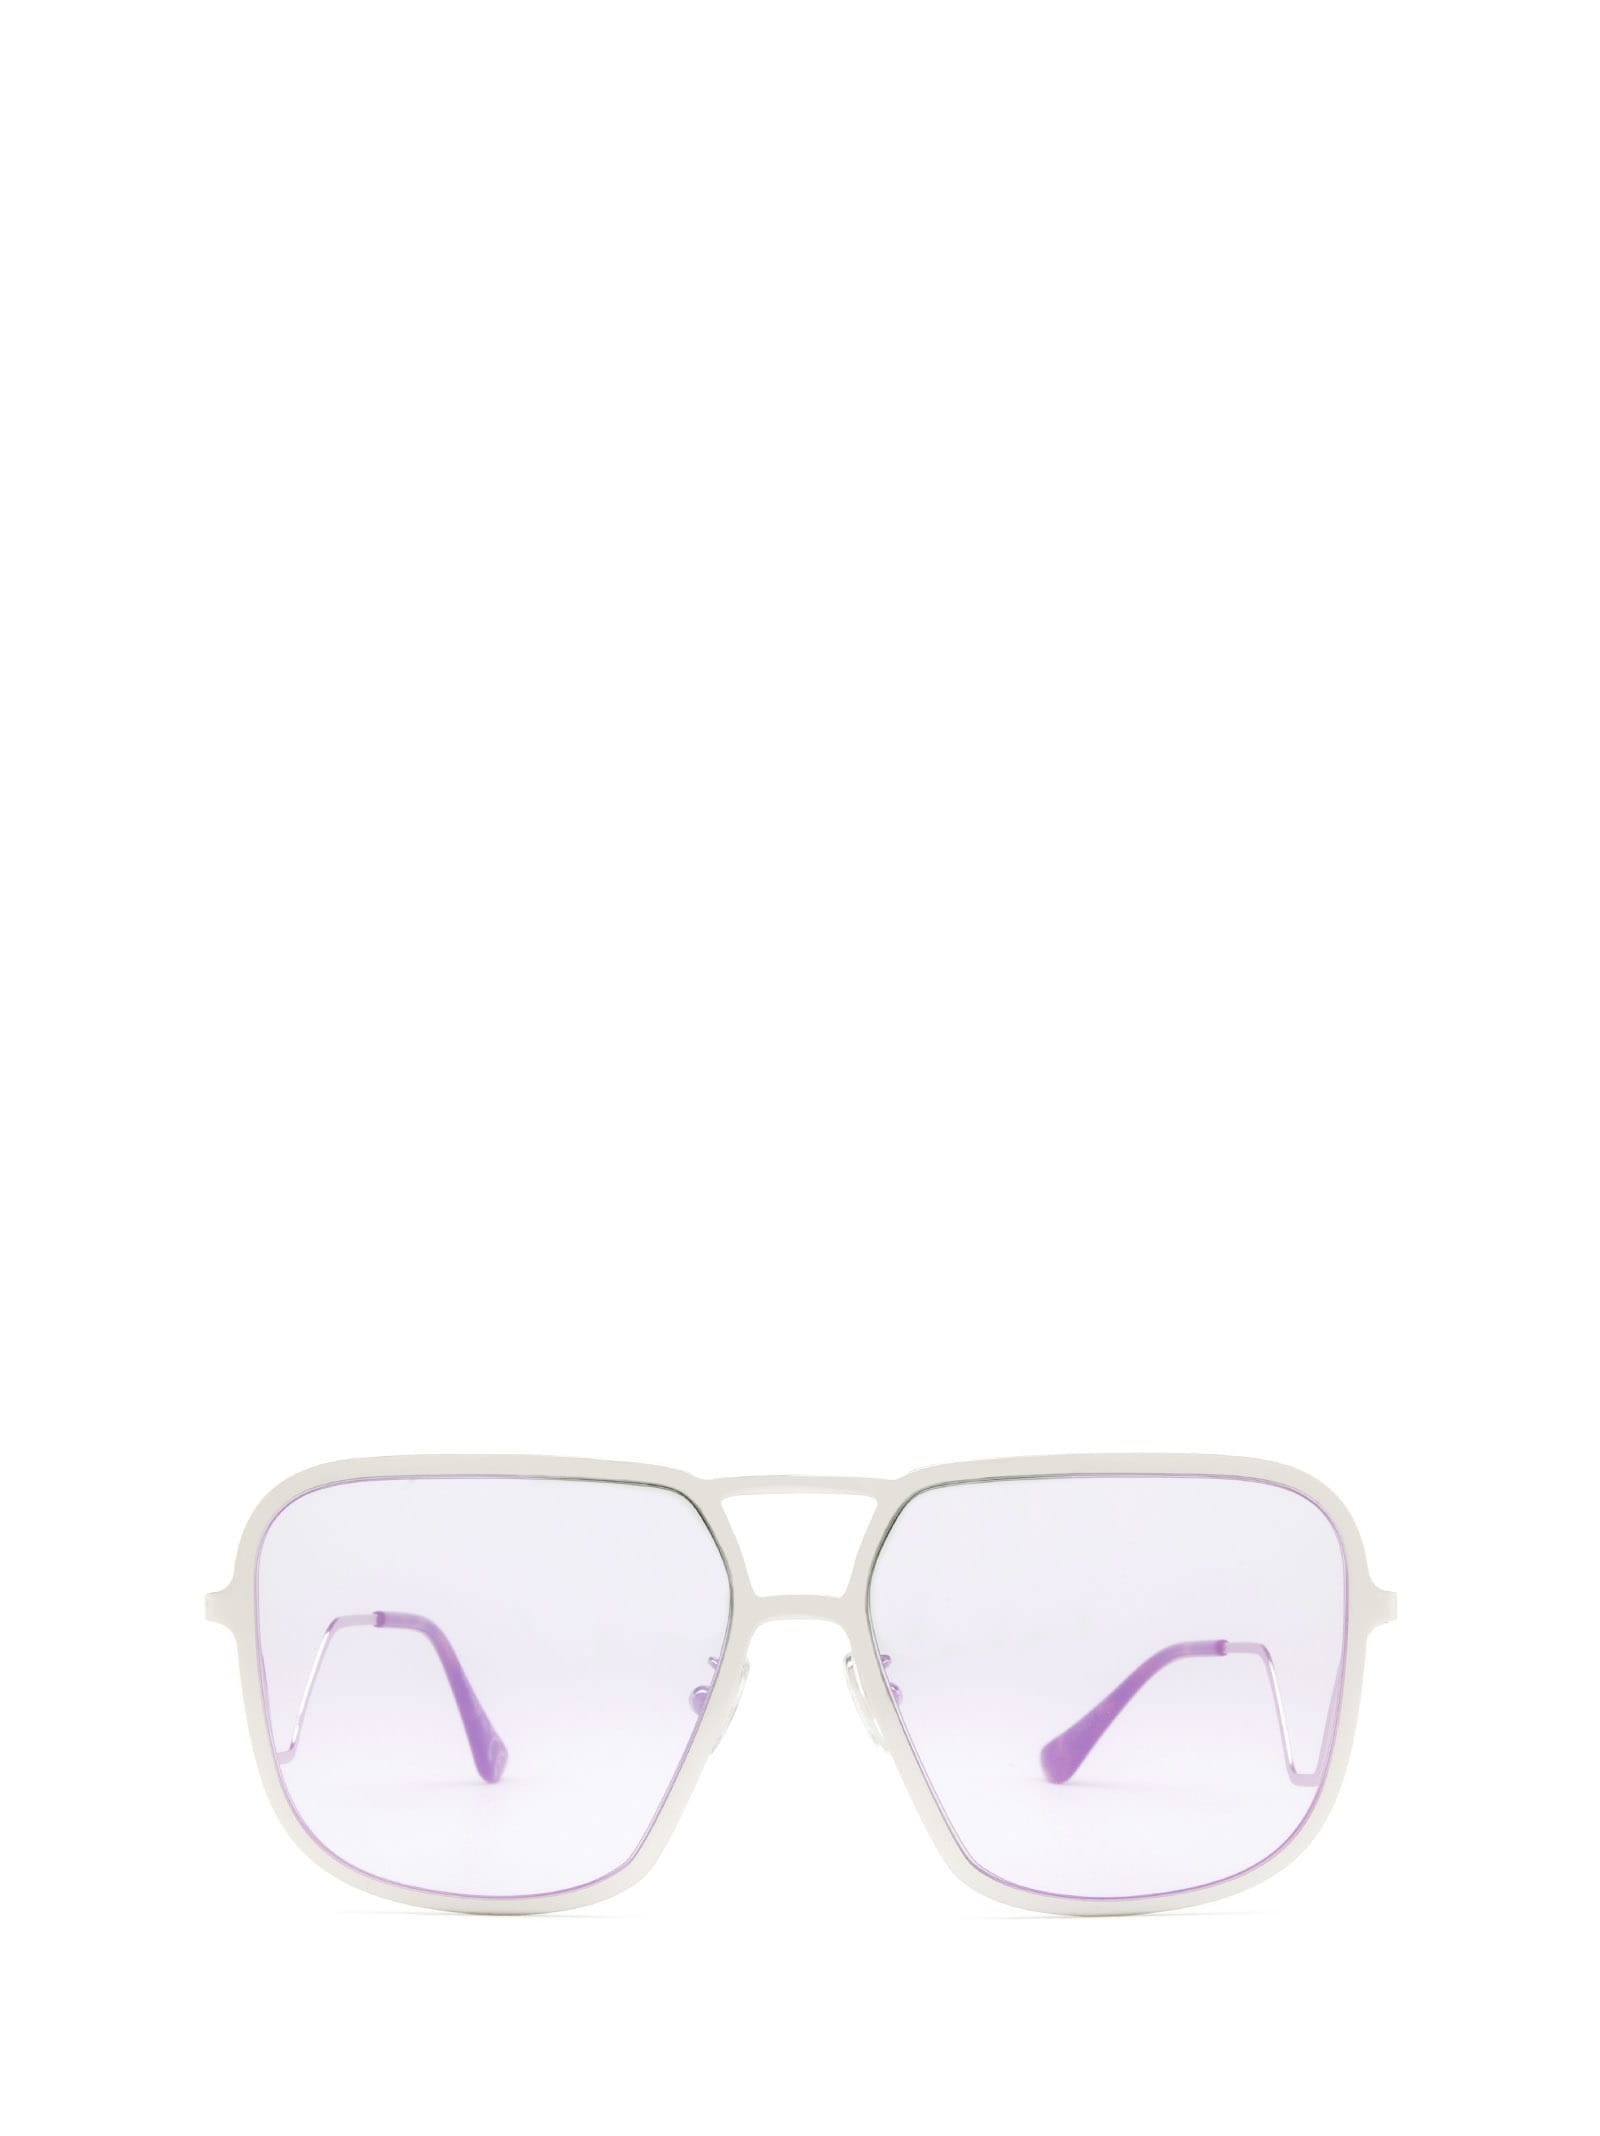 Marni Eyewear Ha Long Bay Silver Sunglasses